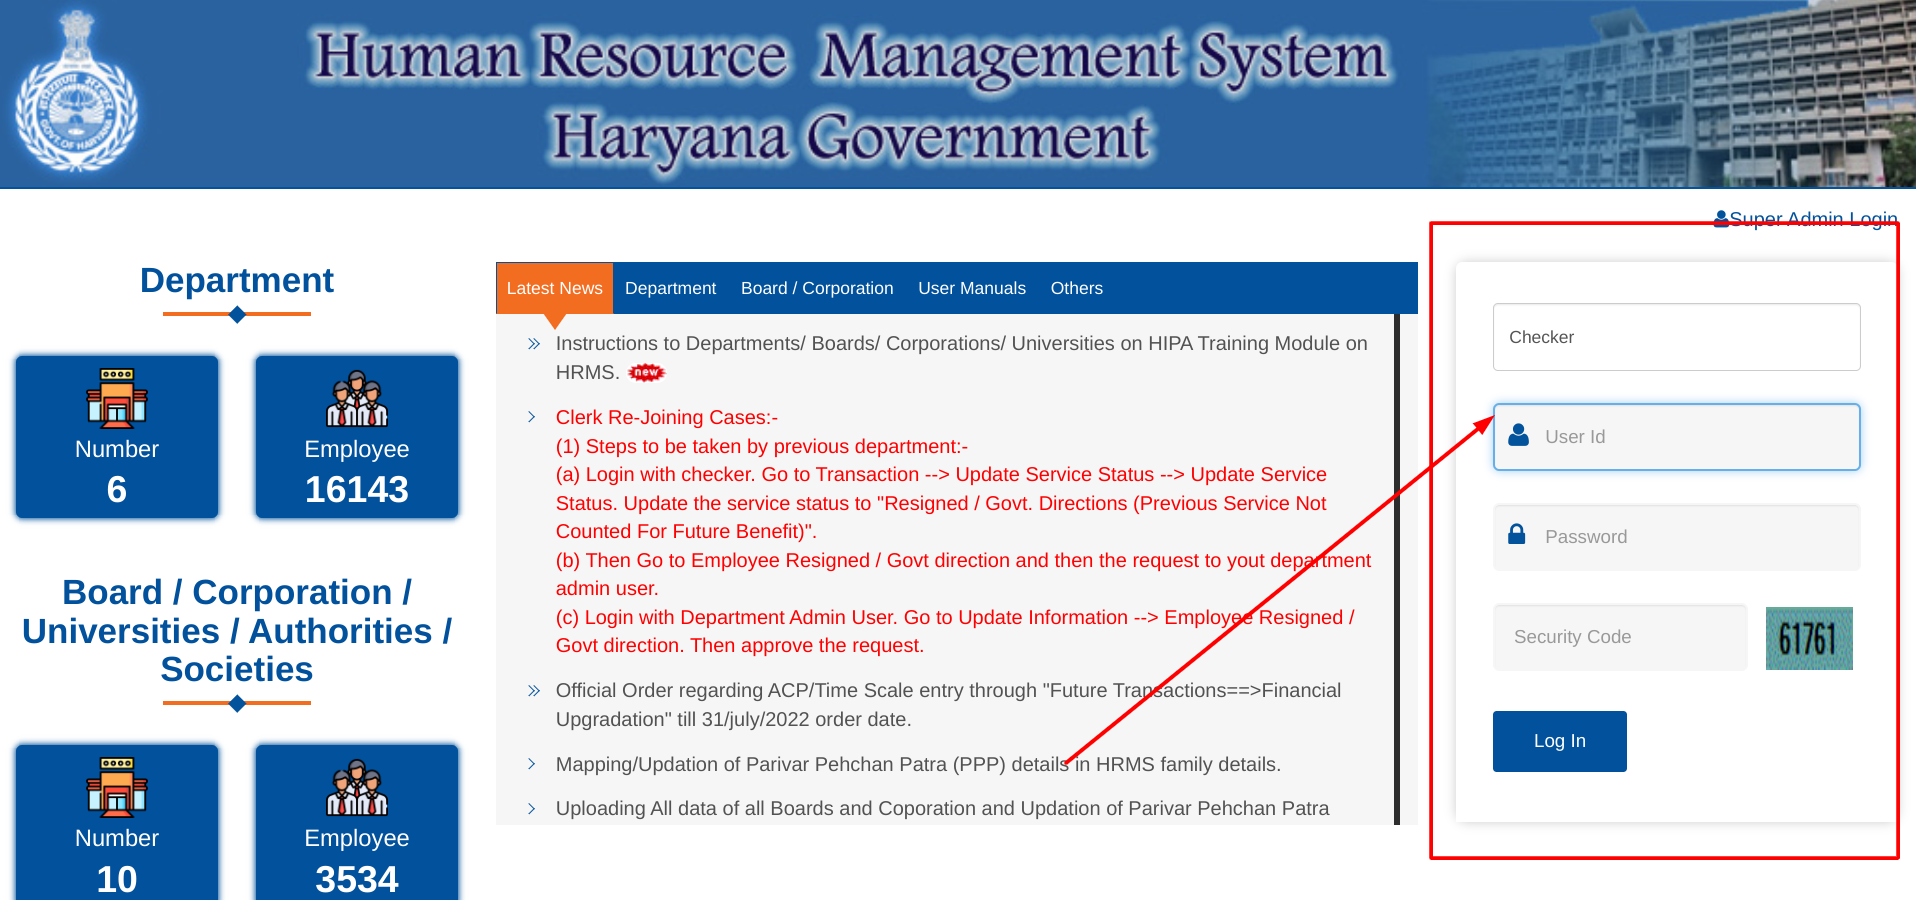 HRMS Haryana 2023 Employee Login @ hrmshry.nic.in, HRMS हरियाणा